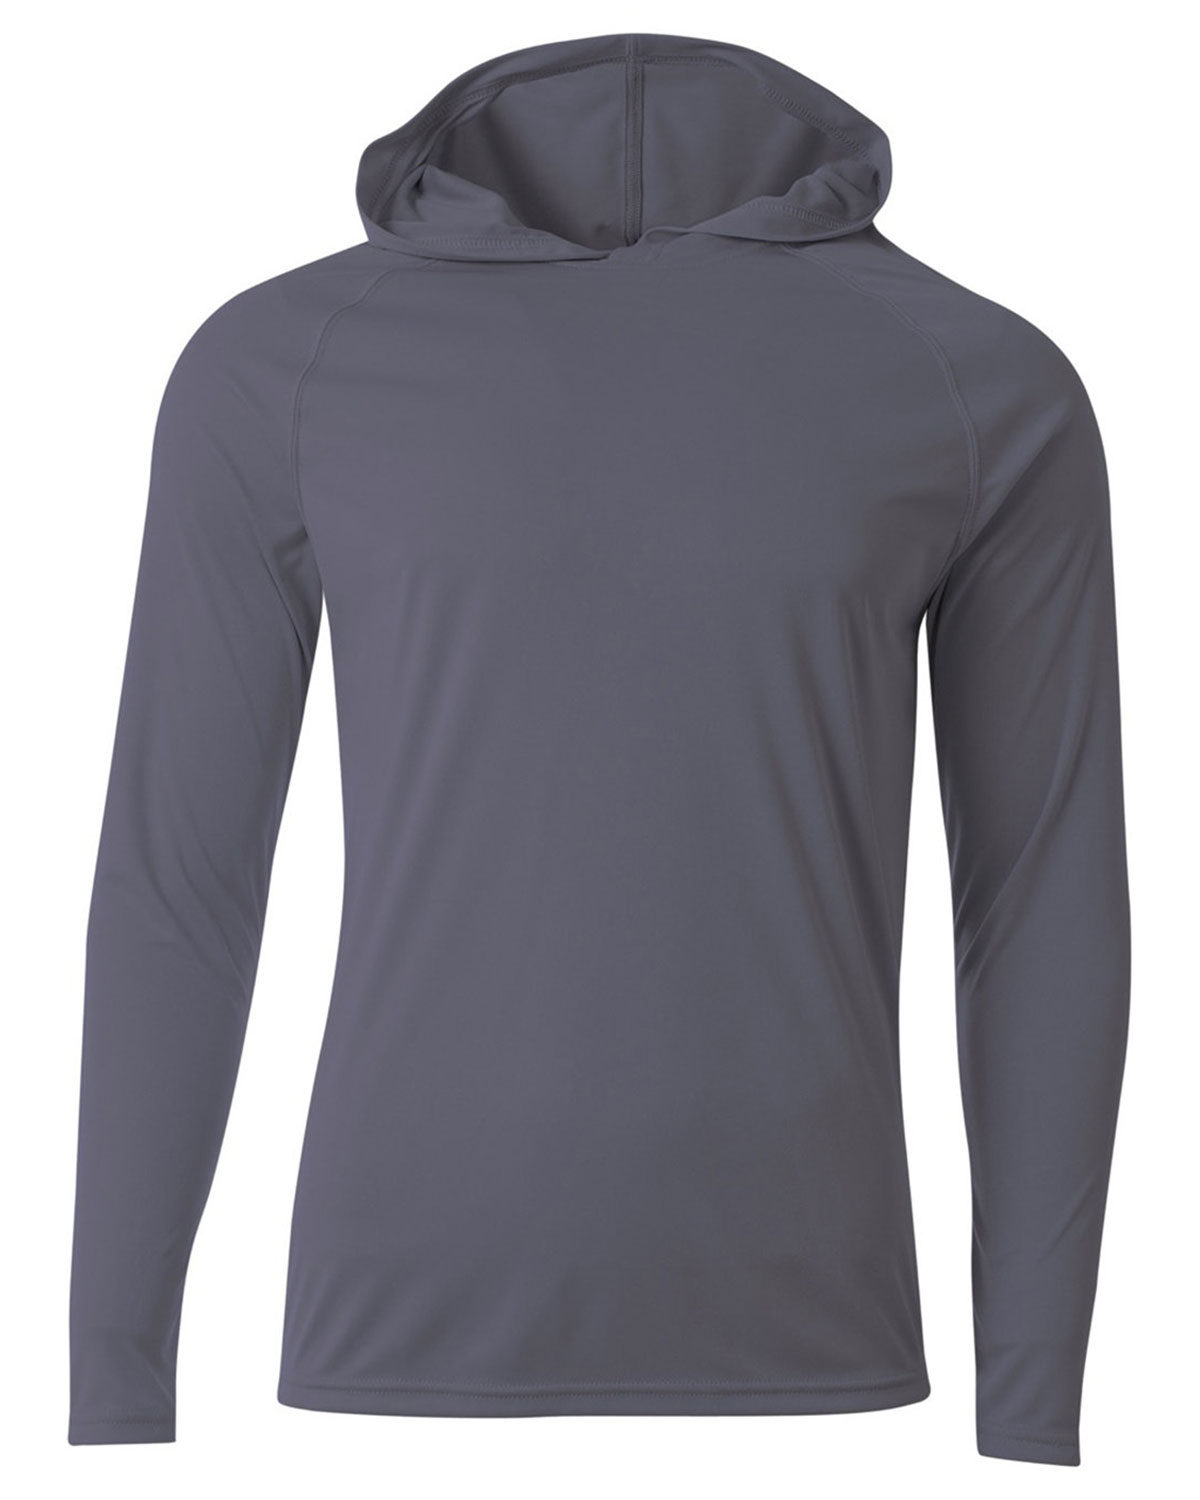 Men's Cooling Performance Long-Sleeve Hooded T-shirt